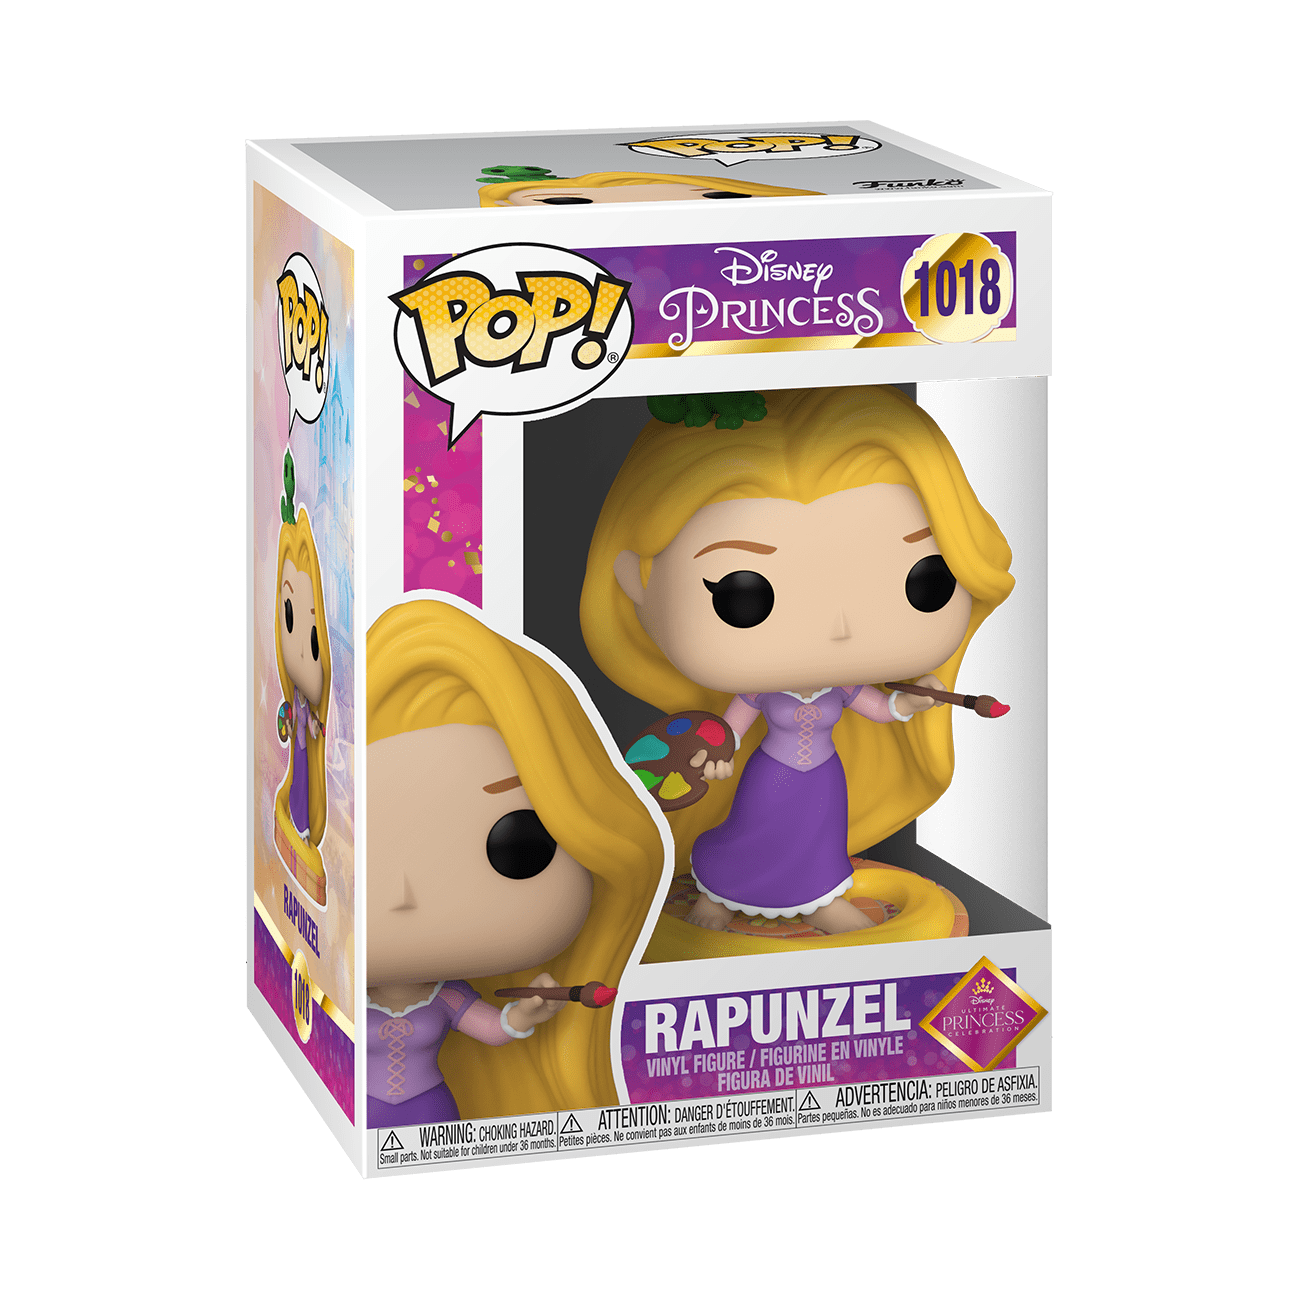 Rapunzel Ultimate Princess Funko Pop! #1018 - The Pop Central